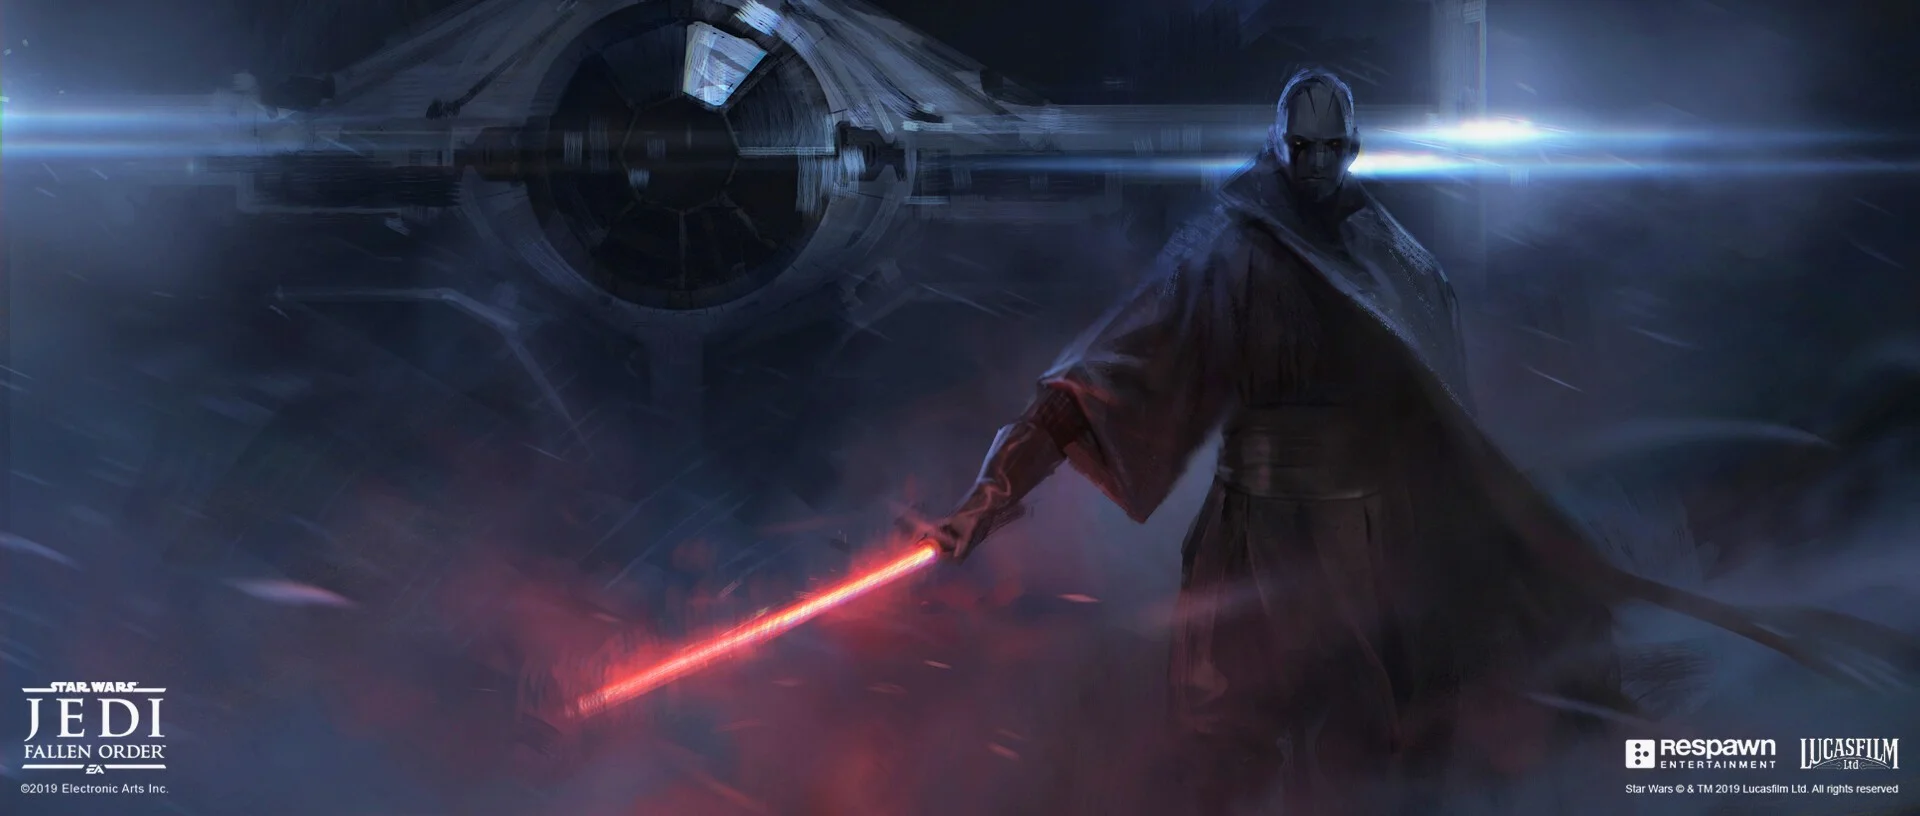 Подборка концептов и иллюстраций Star Wars Jedi: Fallen Order - фото 17